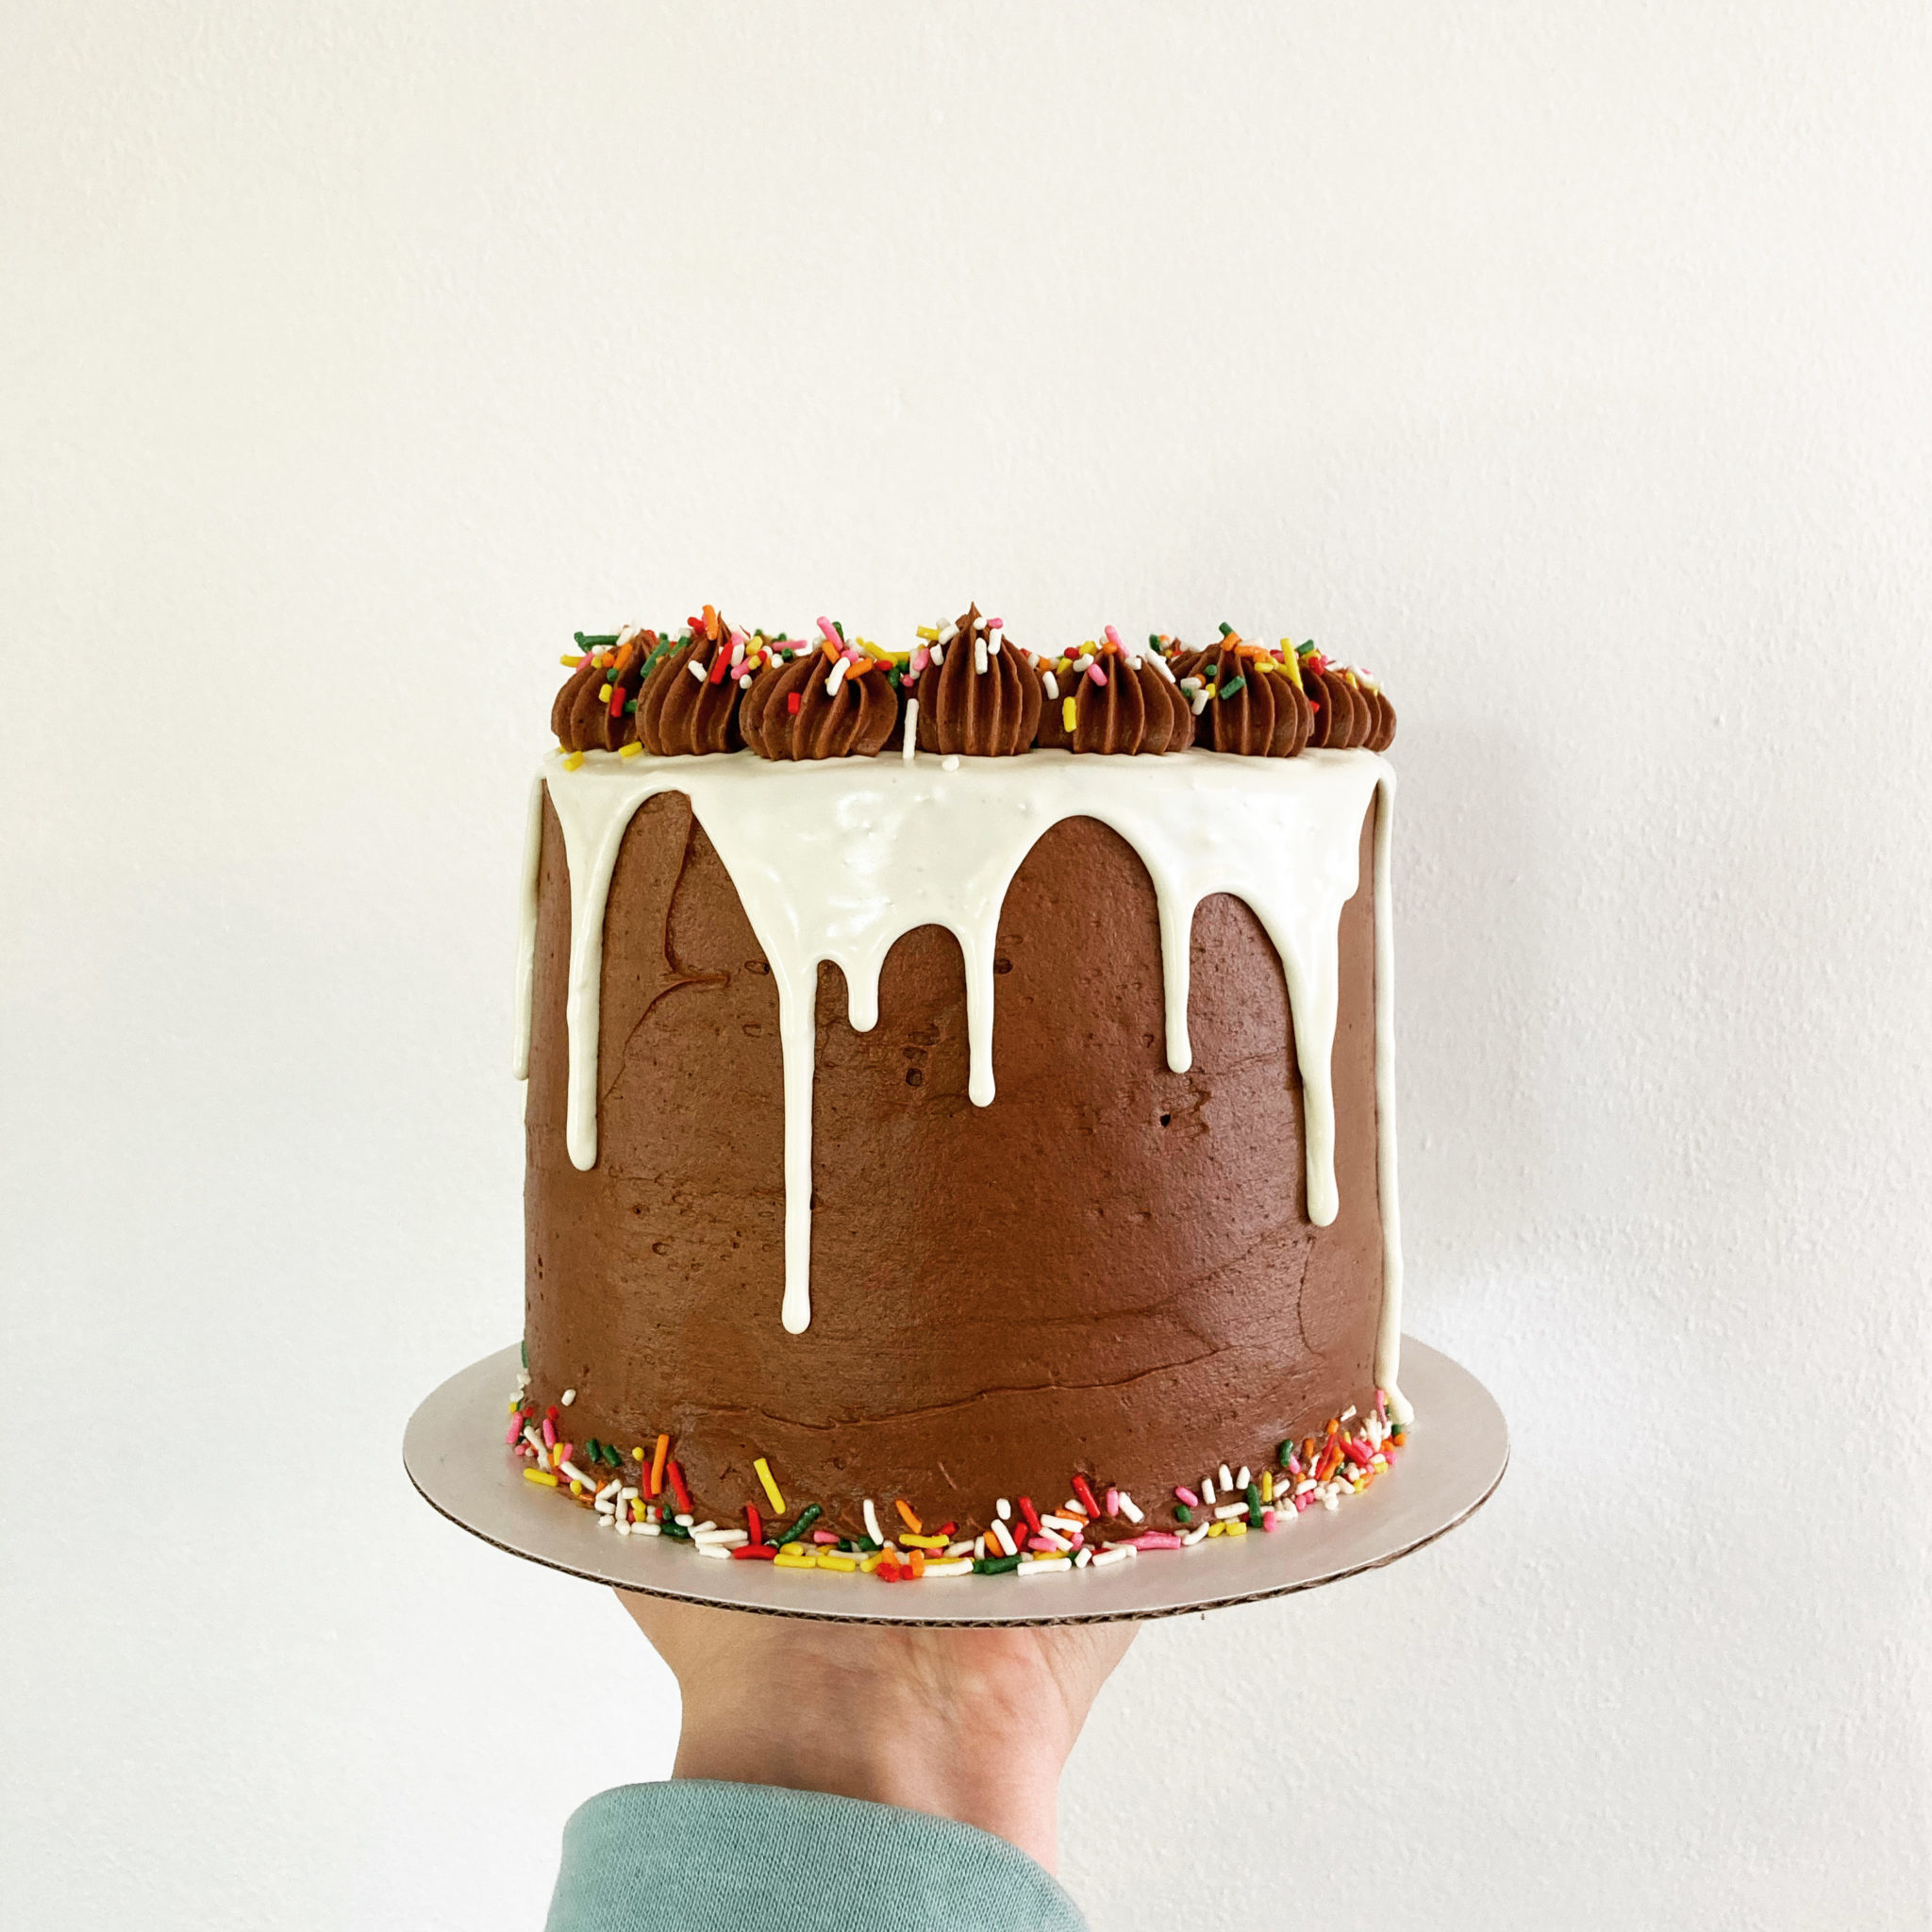 Chocolate cake with white drip